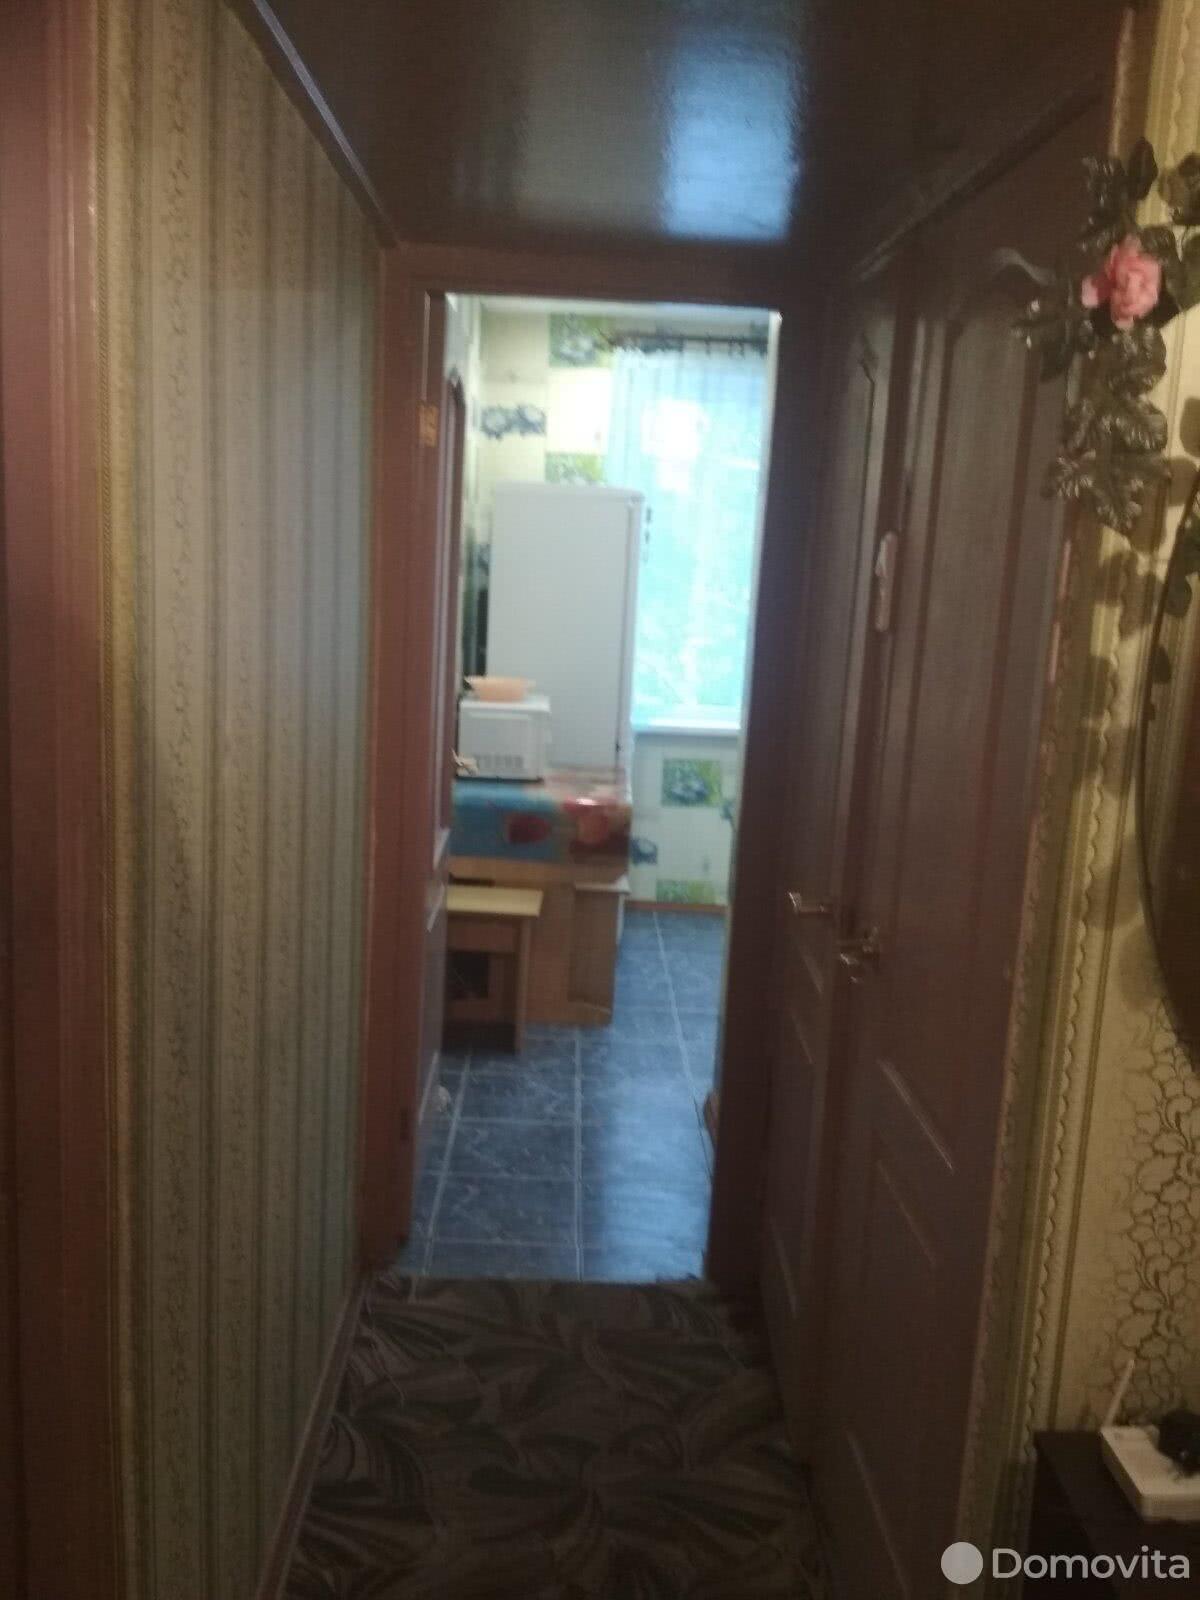 комната, Минск, ул. Ландера, д. 46, стоимость аренды 452 р./мес.